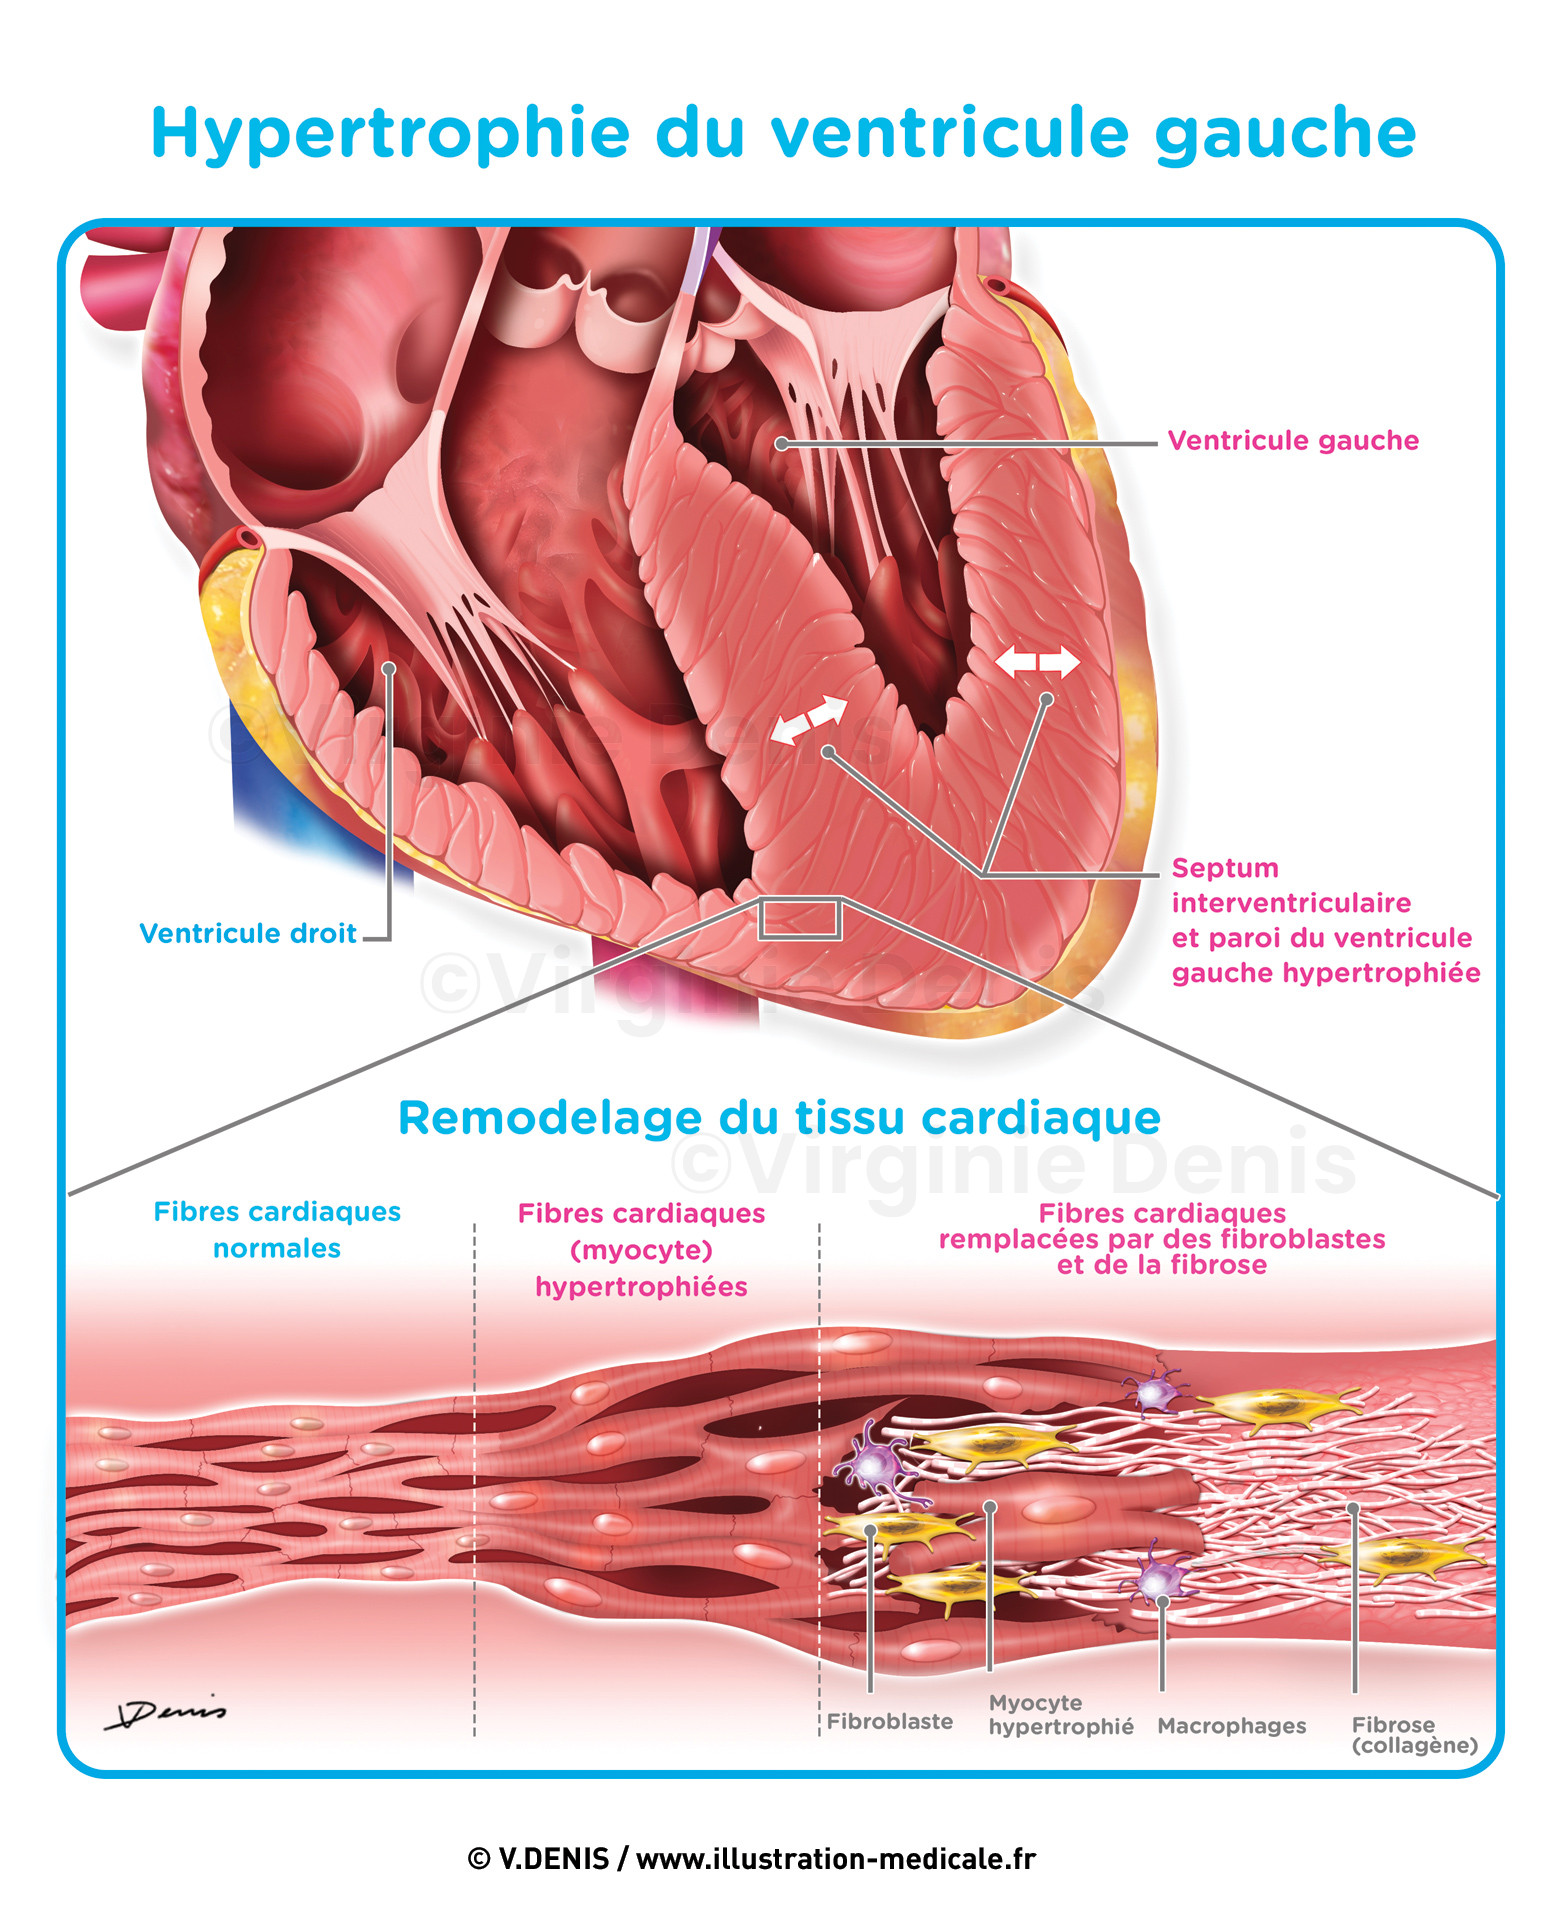 Dilatation du ventricule gauche - insuffisance cardiaque